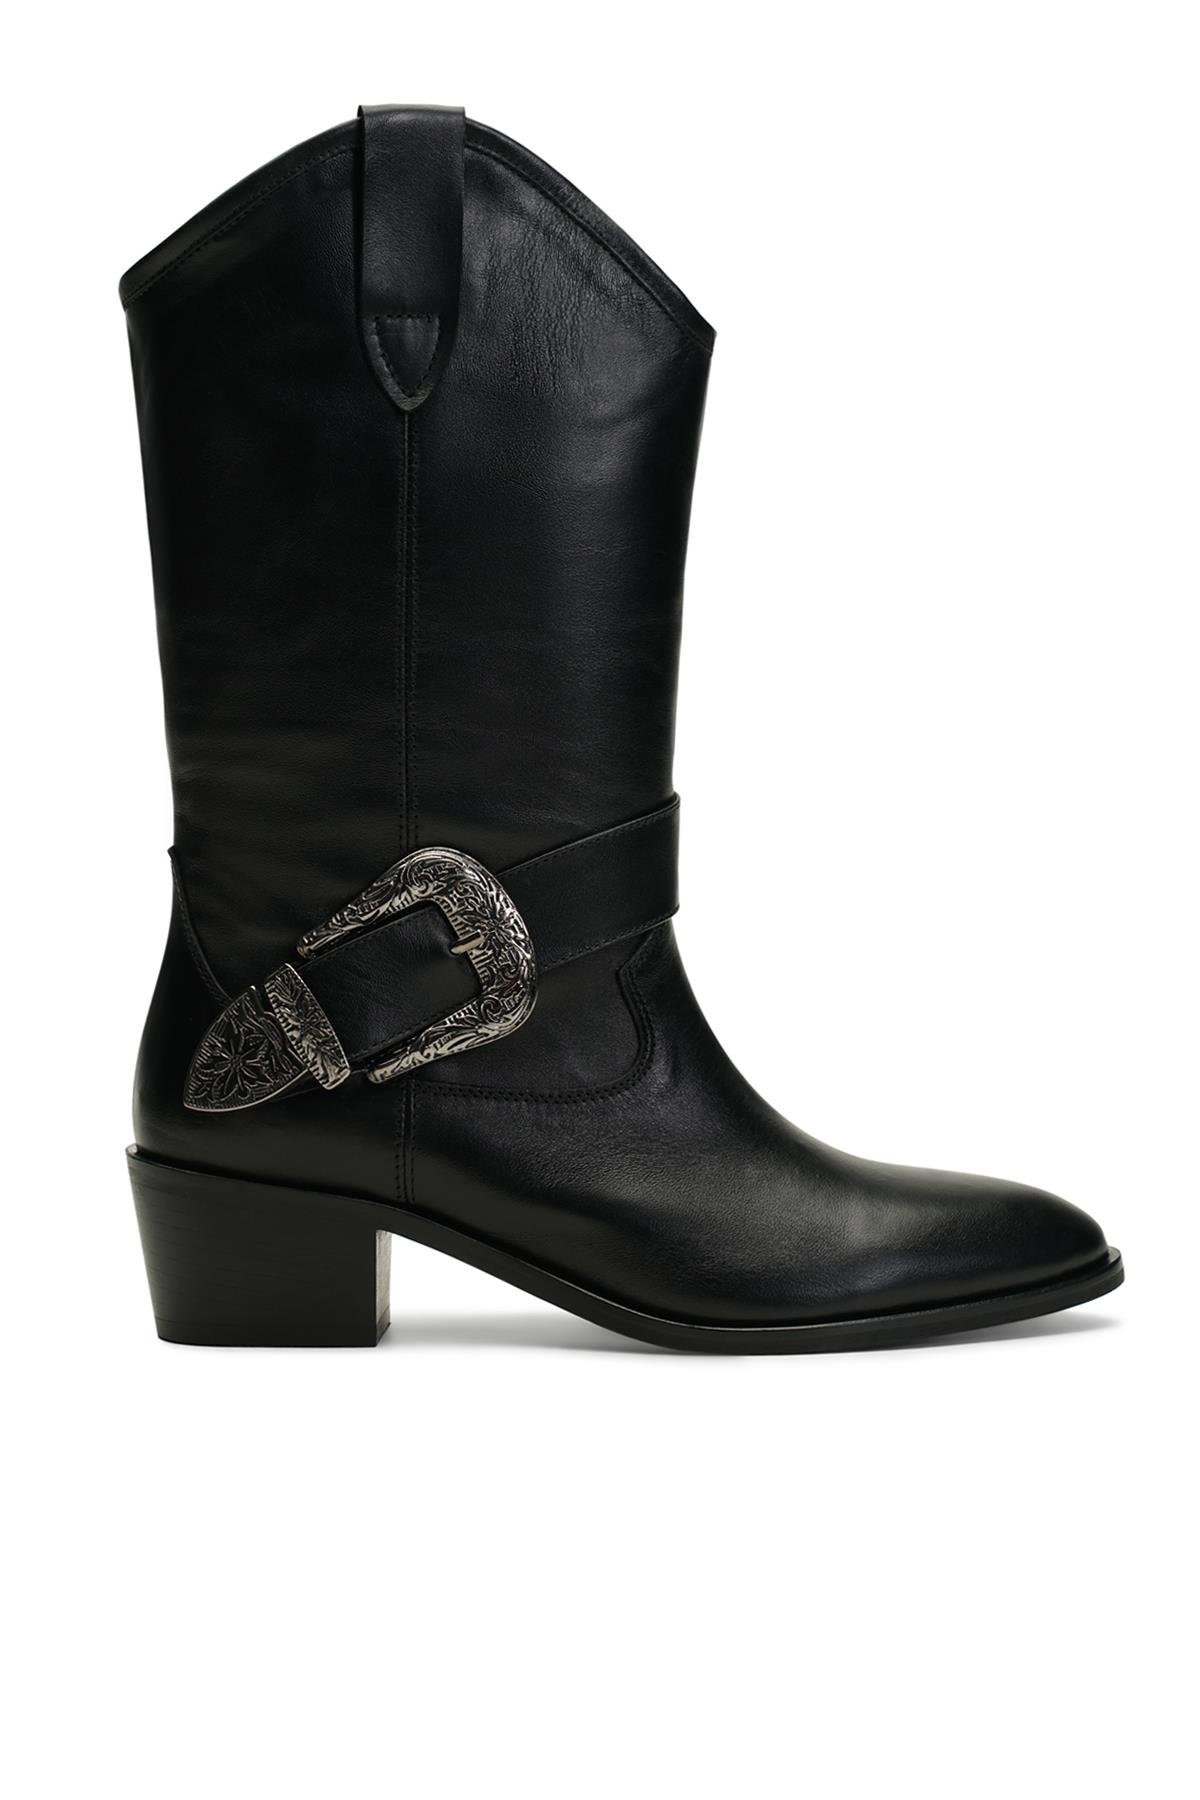 Jabotter Janet Black Leather Cowboy Boots